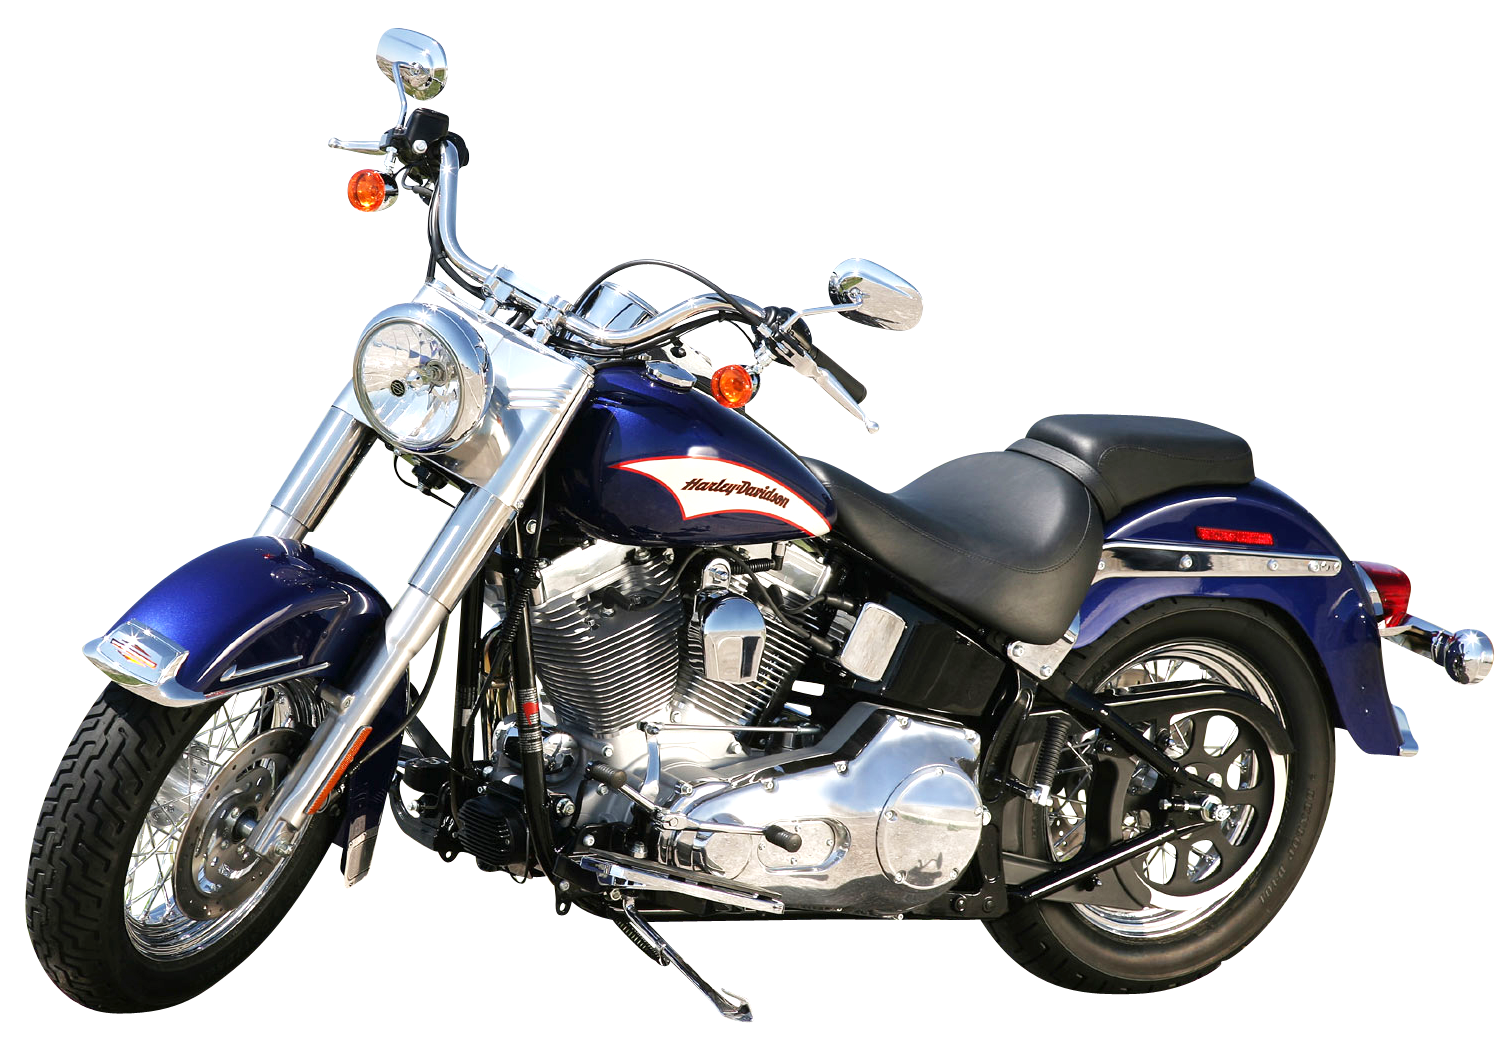 Harley Davidson PNG Image with Transparent Background